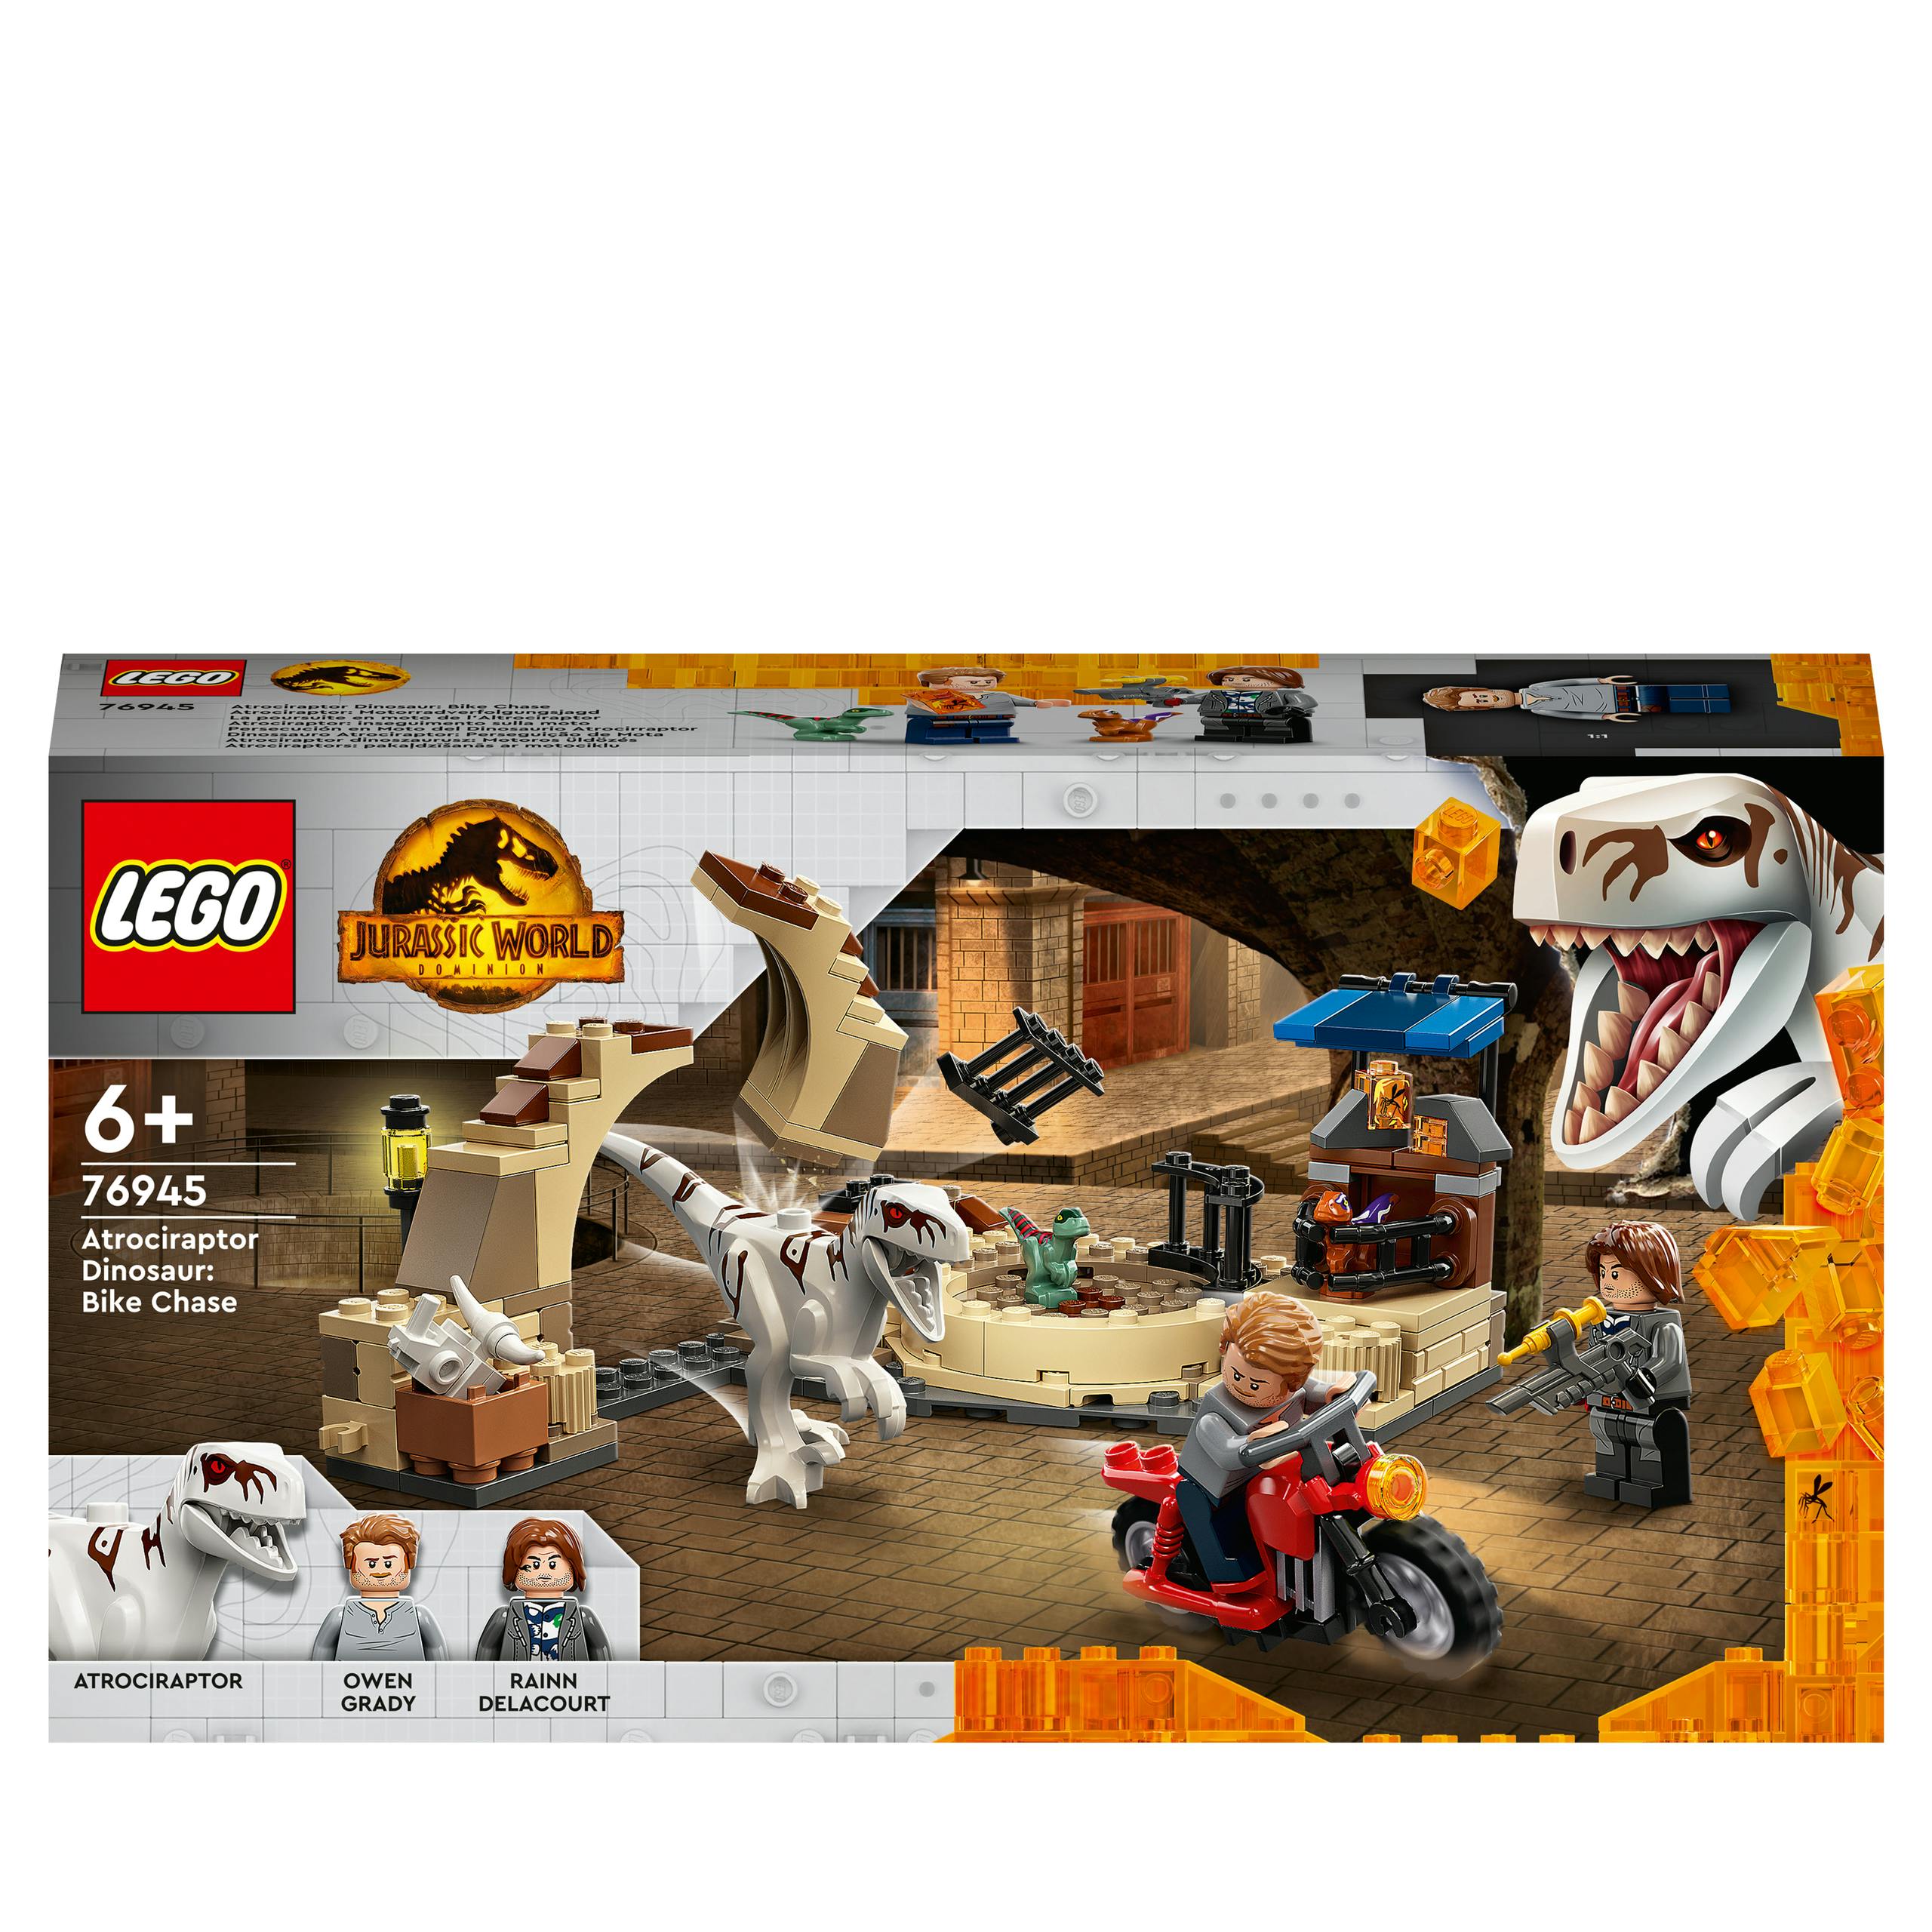 voelen censuur Bemiddelaar LEGO Jurassic World Atrociraptor Dinosaurus Motorachtervolging (76945)